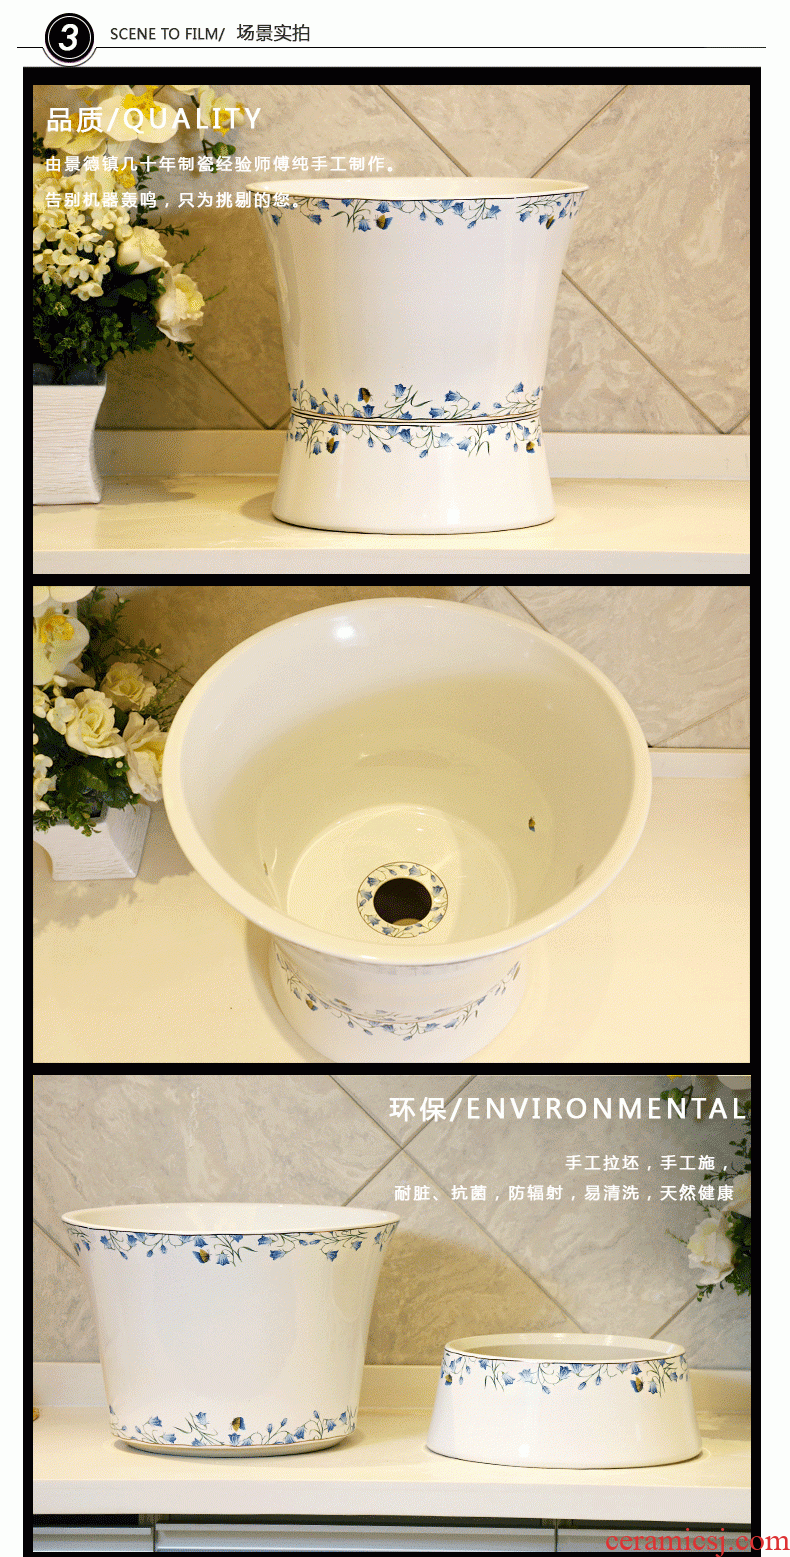 The package mail basin of jingdezhen ceramic art mop mop pool mop pool jasmine quietly elegant